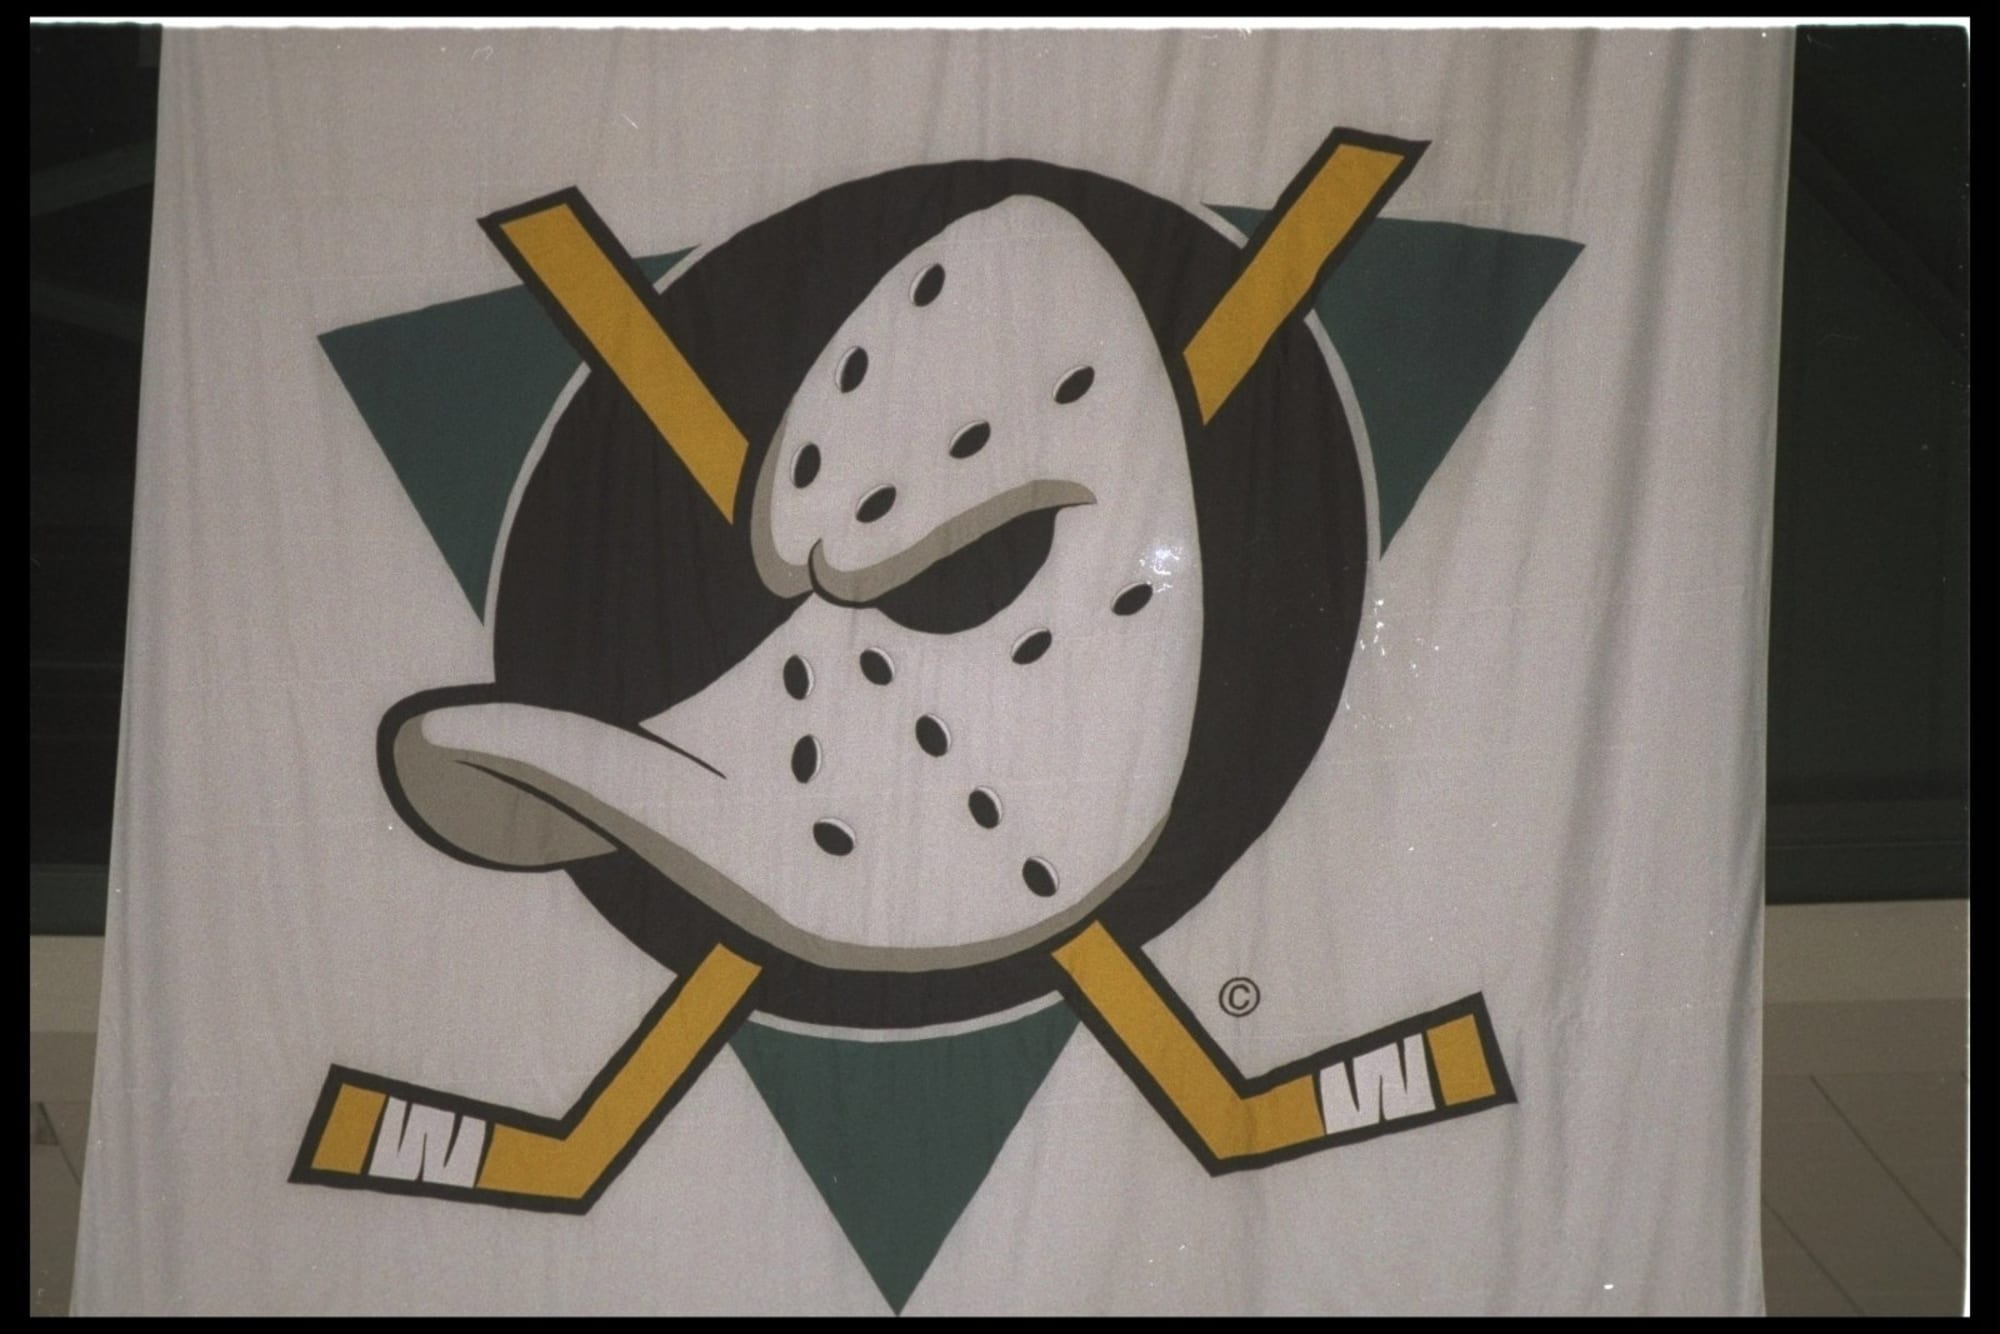 Bmac's Blog: Anaheim Ducks Concept